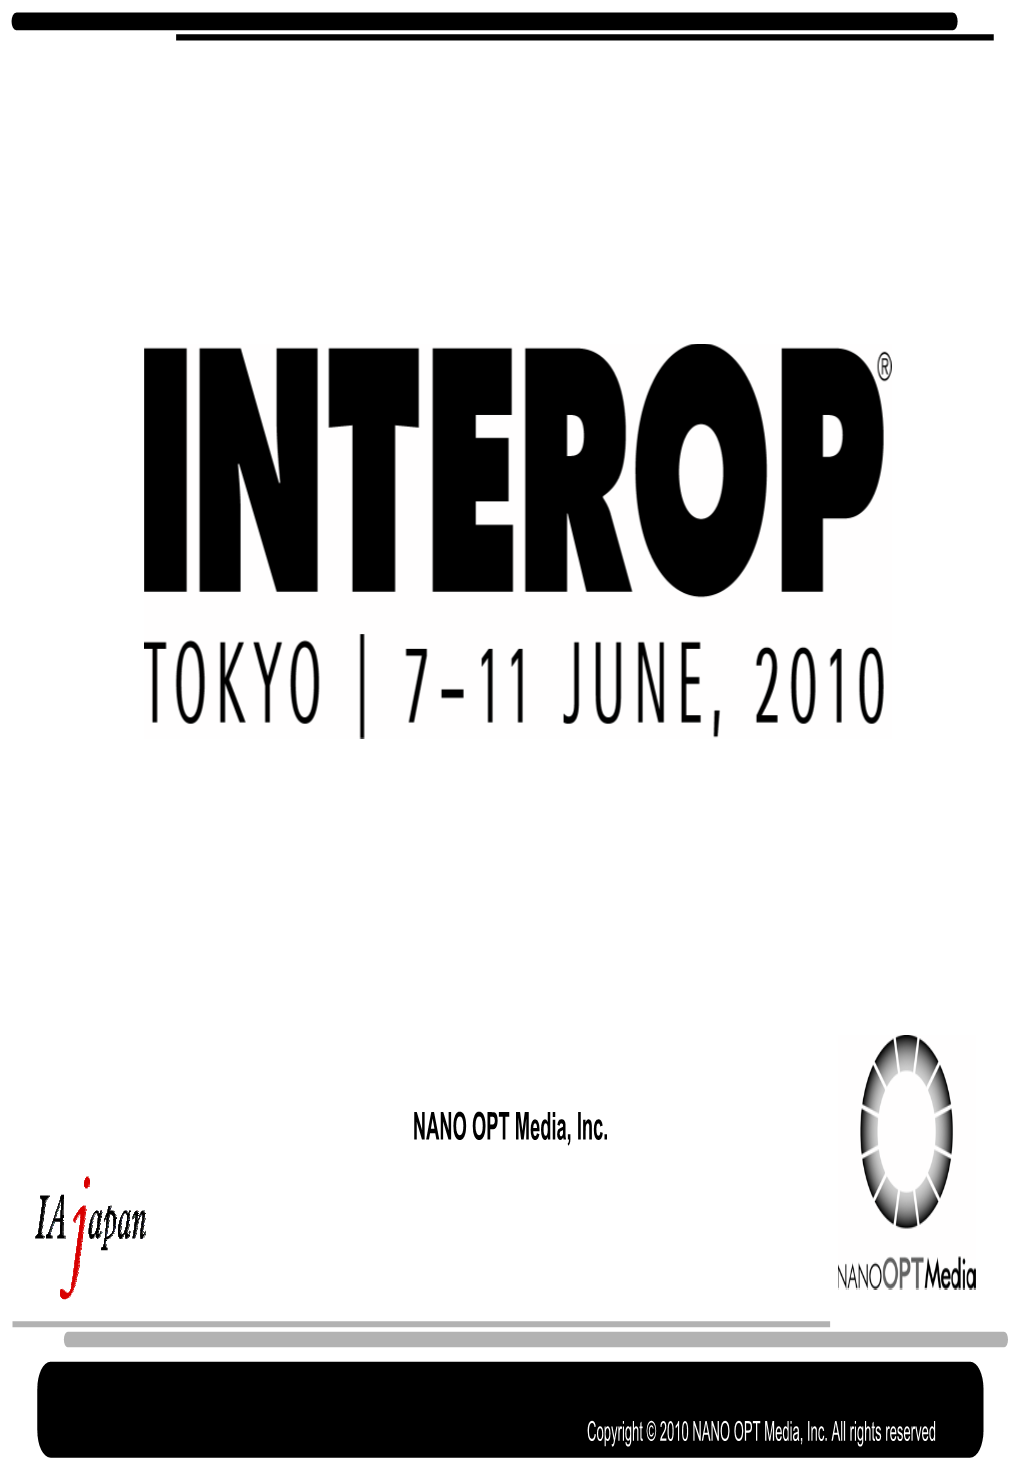 Interop Tokyo 2010 Steering Committee Management: Internet Association Japan, NANO OPT Media, Inc